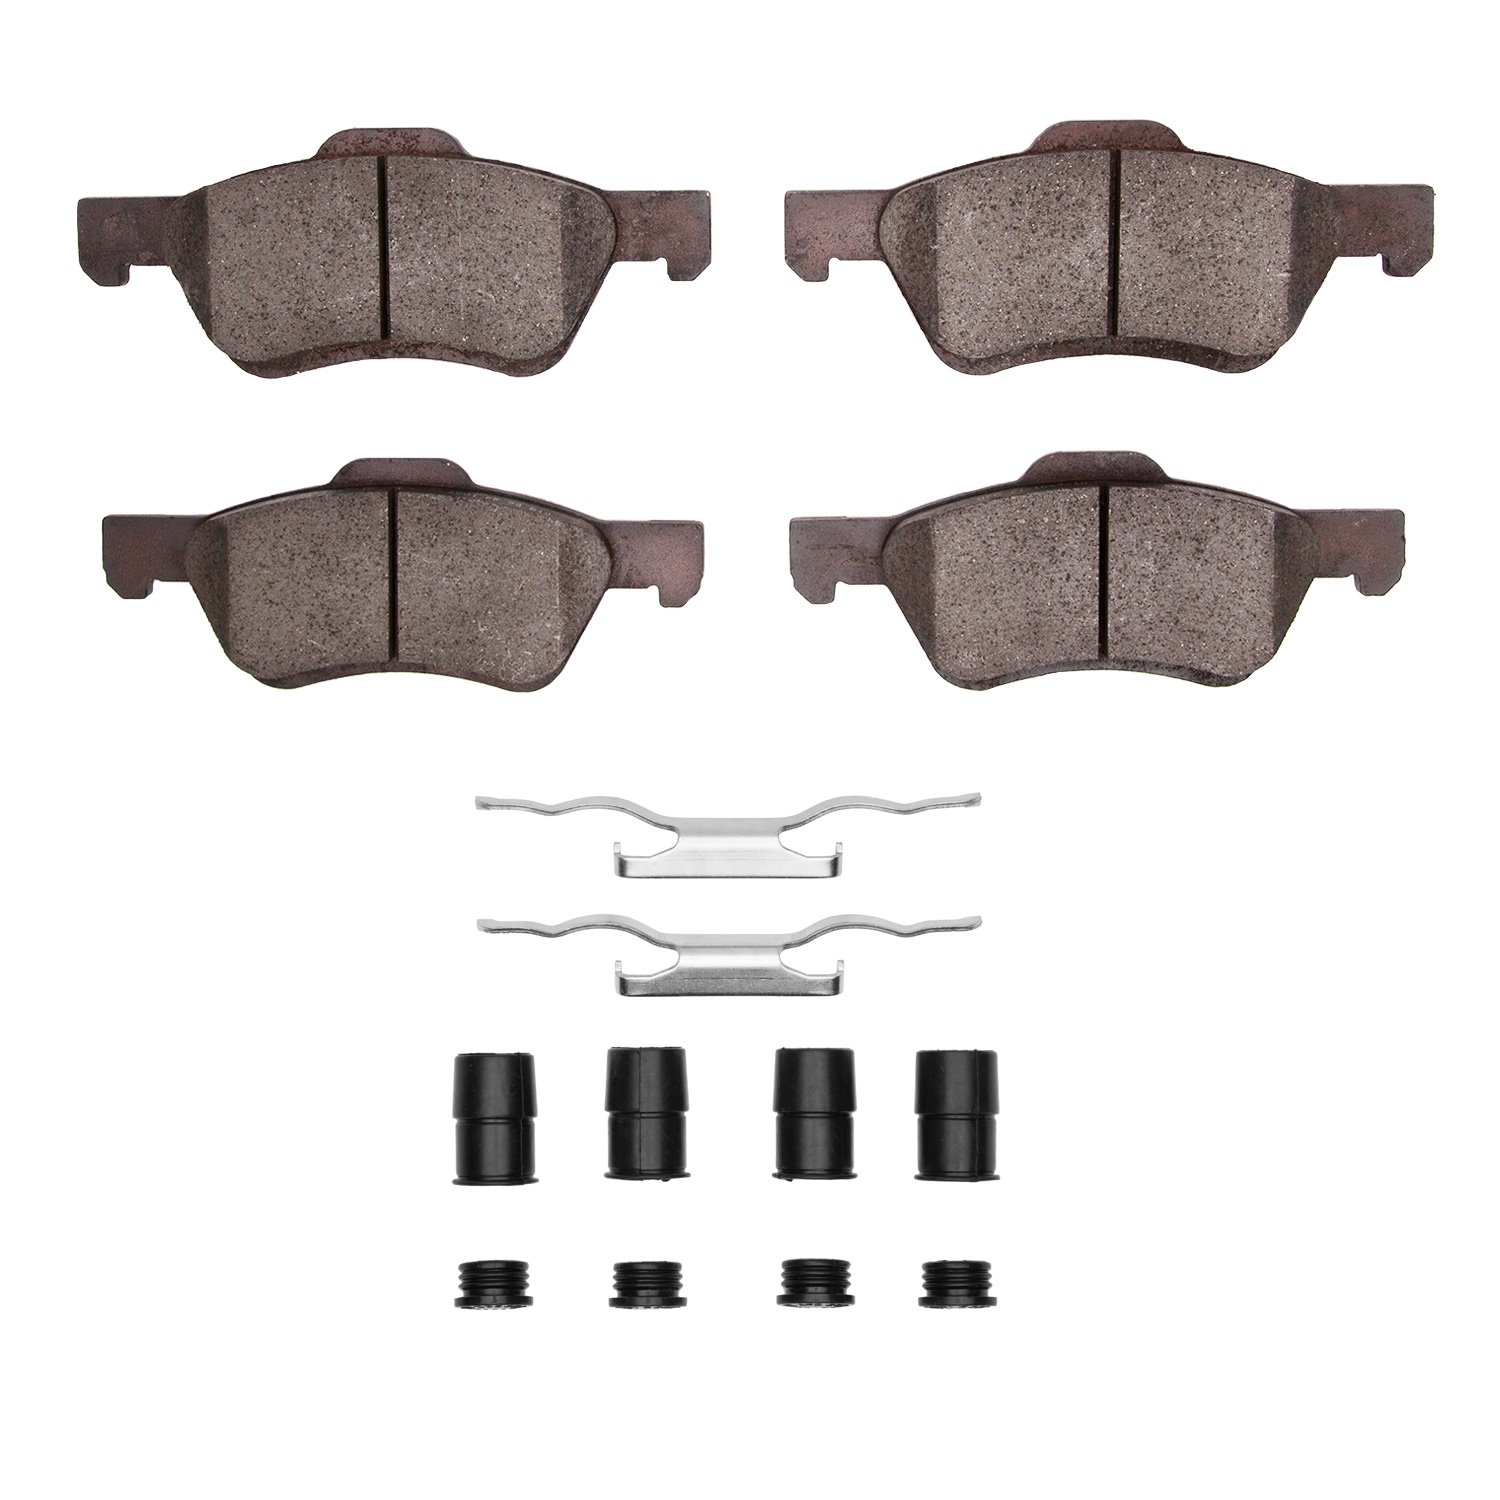 1310-1047-11 3000-Series Ceramic Brake Pads & Hardware Kit, 2008-2012 Ford/Lincoln/Mercury/Mazda, Position: Front